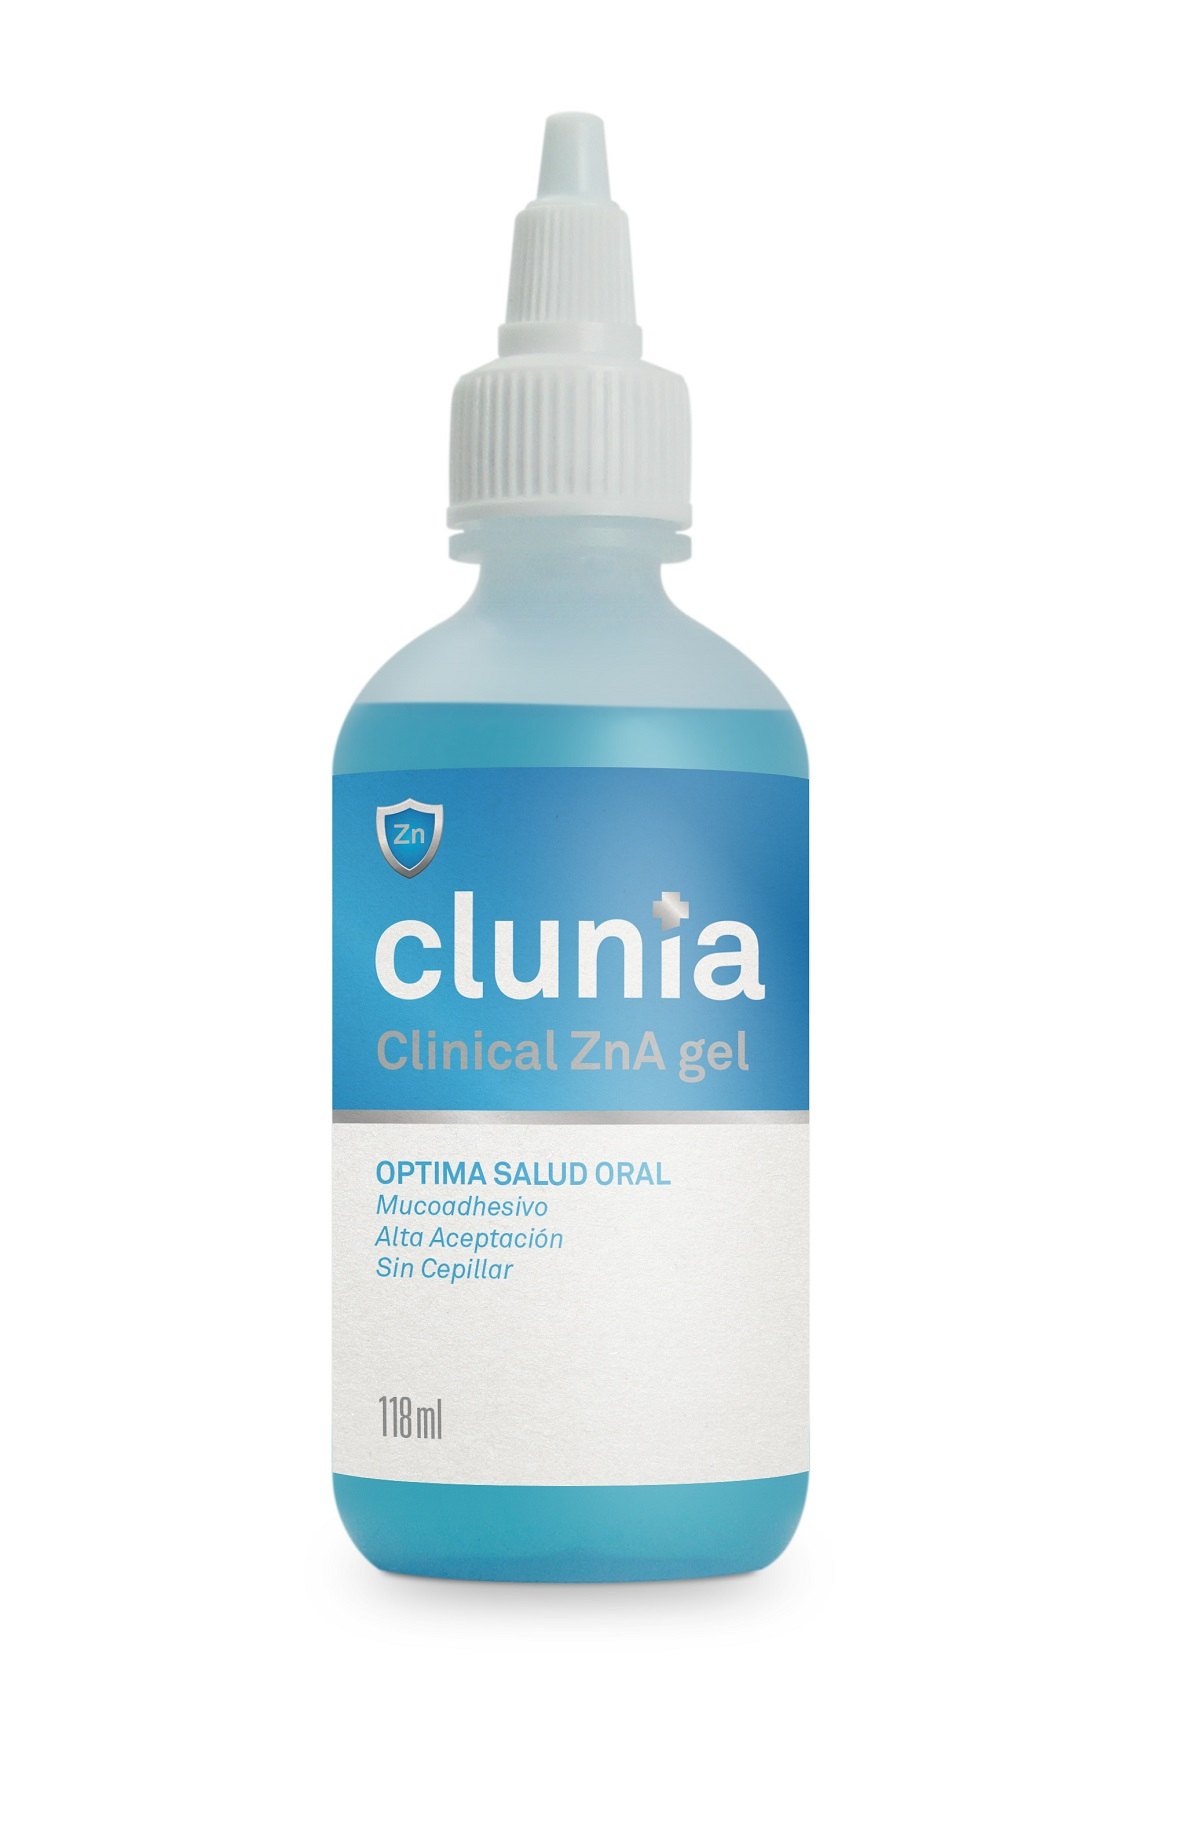 CLUNIA Zn-A Clinical Gel pour chien, chat, cheval et autres animaux